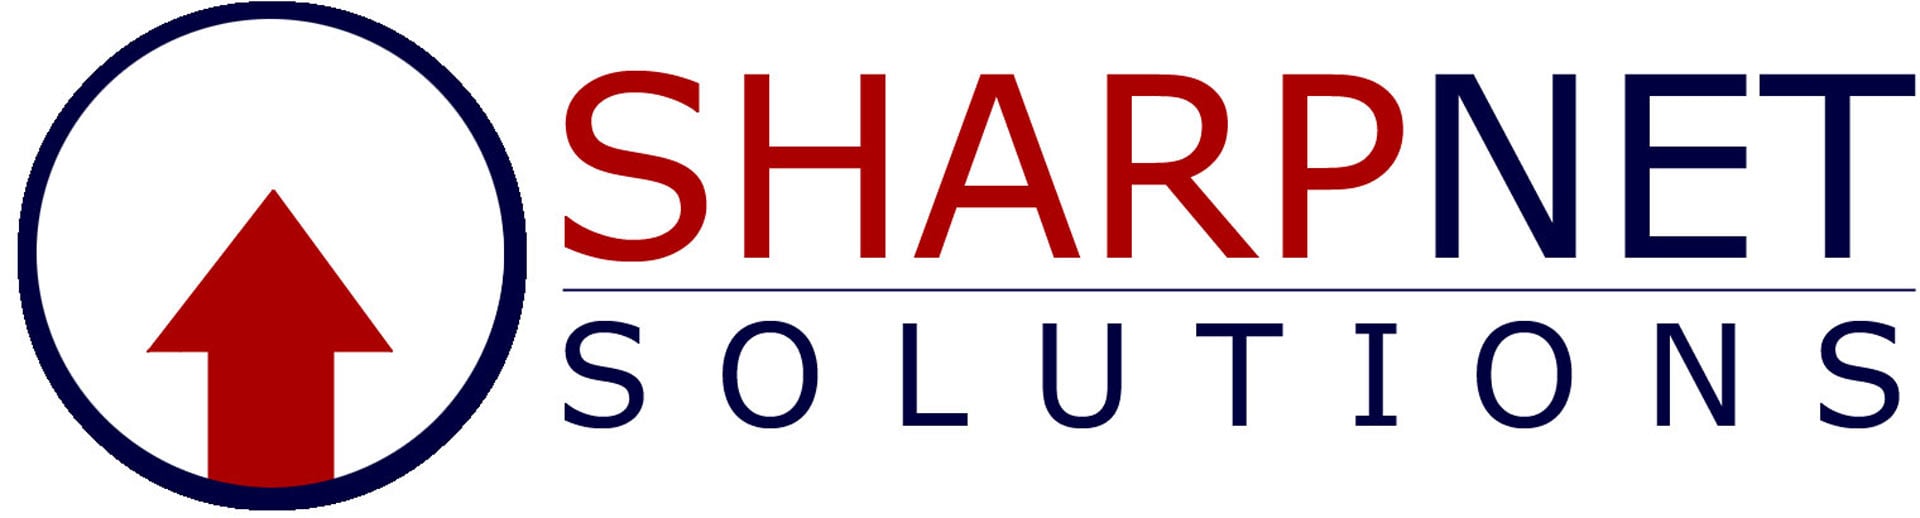 Best SMM Company Logo: SharpNet